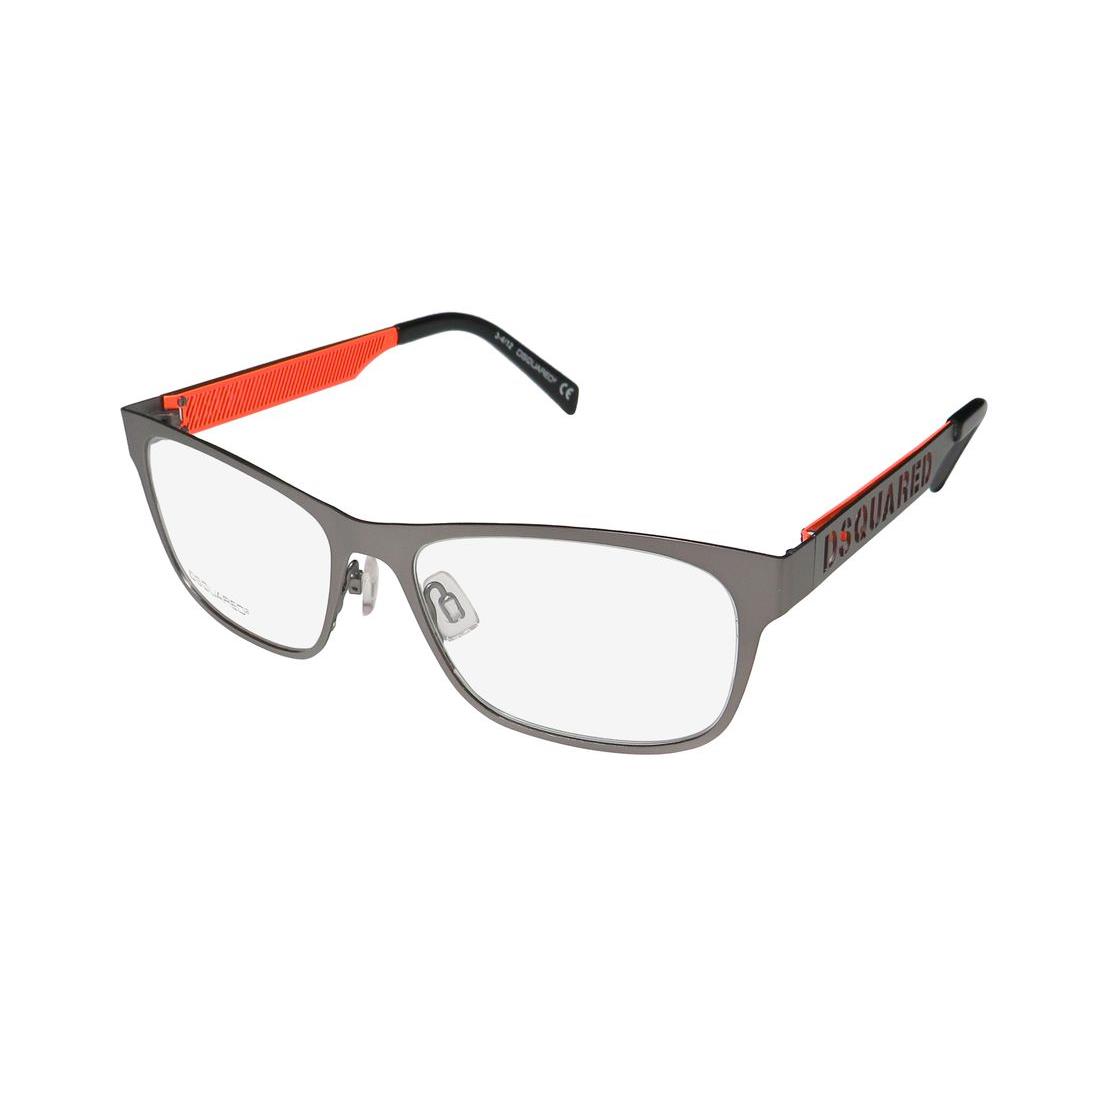 DSQUARED2 DQ 5097 Contemporary Premium Segment Adults Hip Eyeglass Frame/glasses Brown / Orange / Black